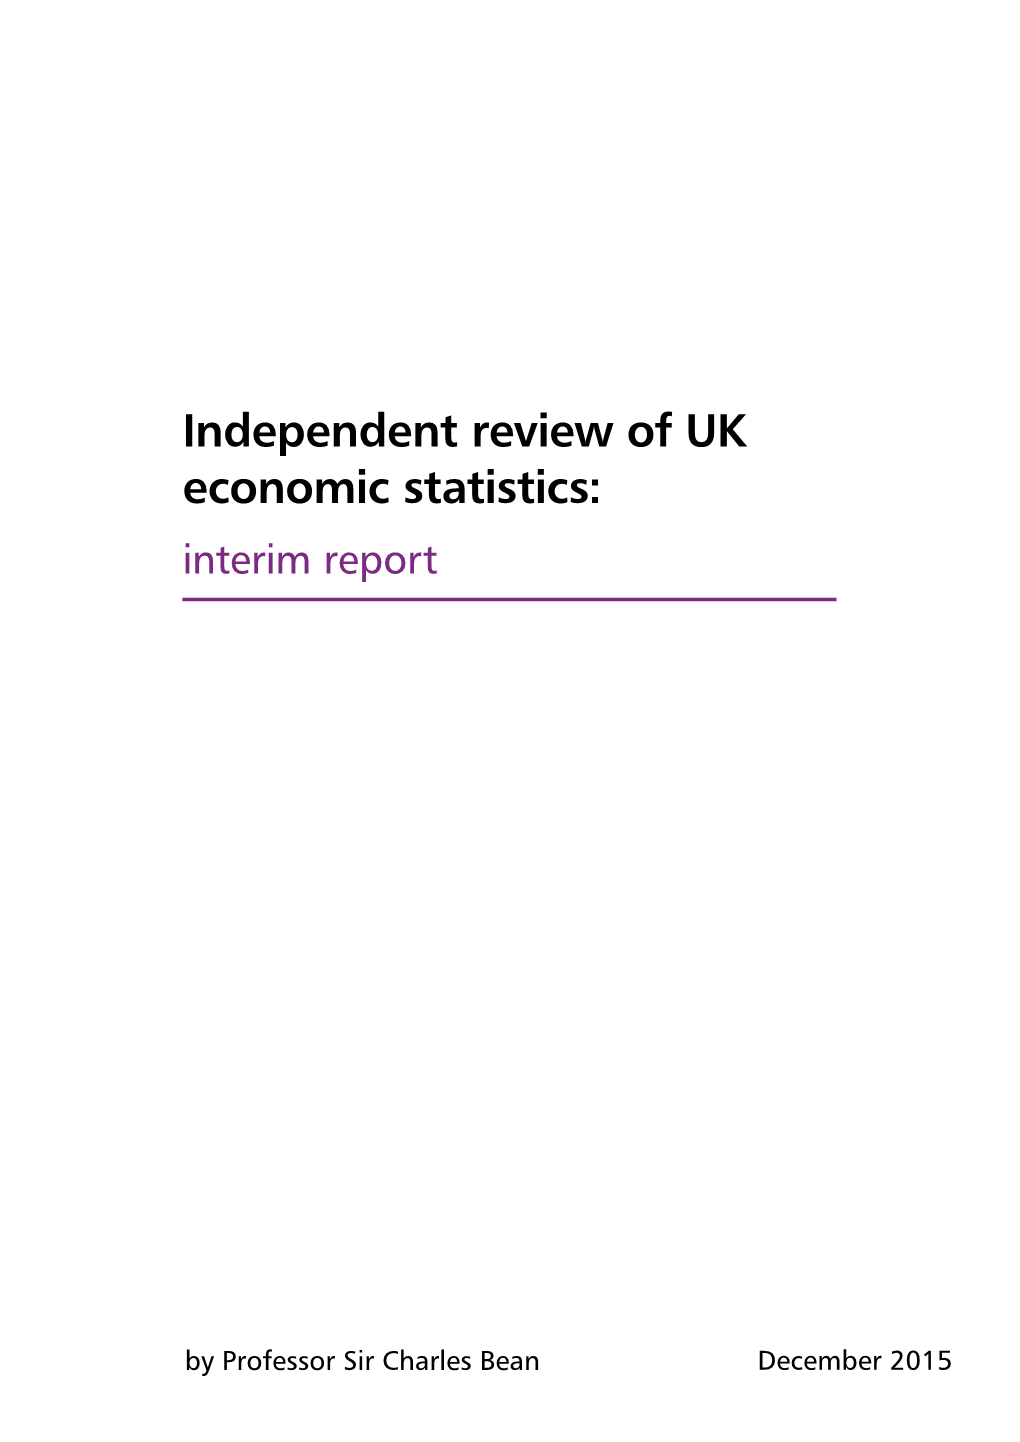 Independent Review of UK Economic Statistics: Interim Report